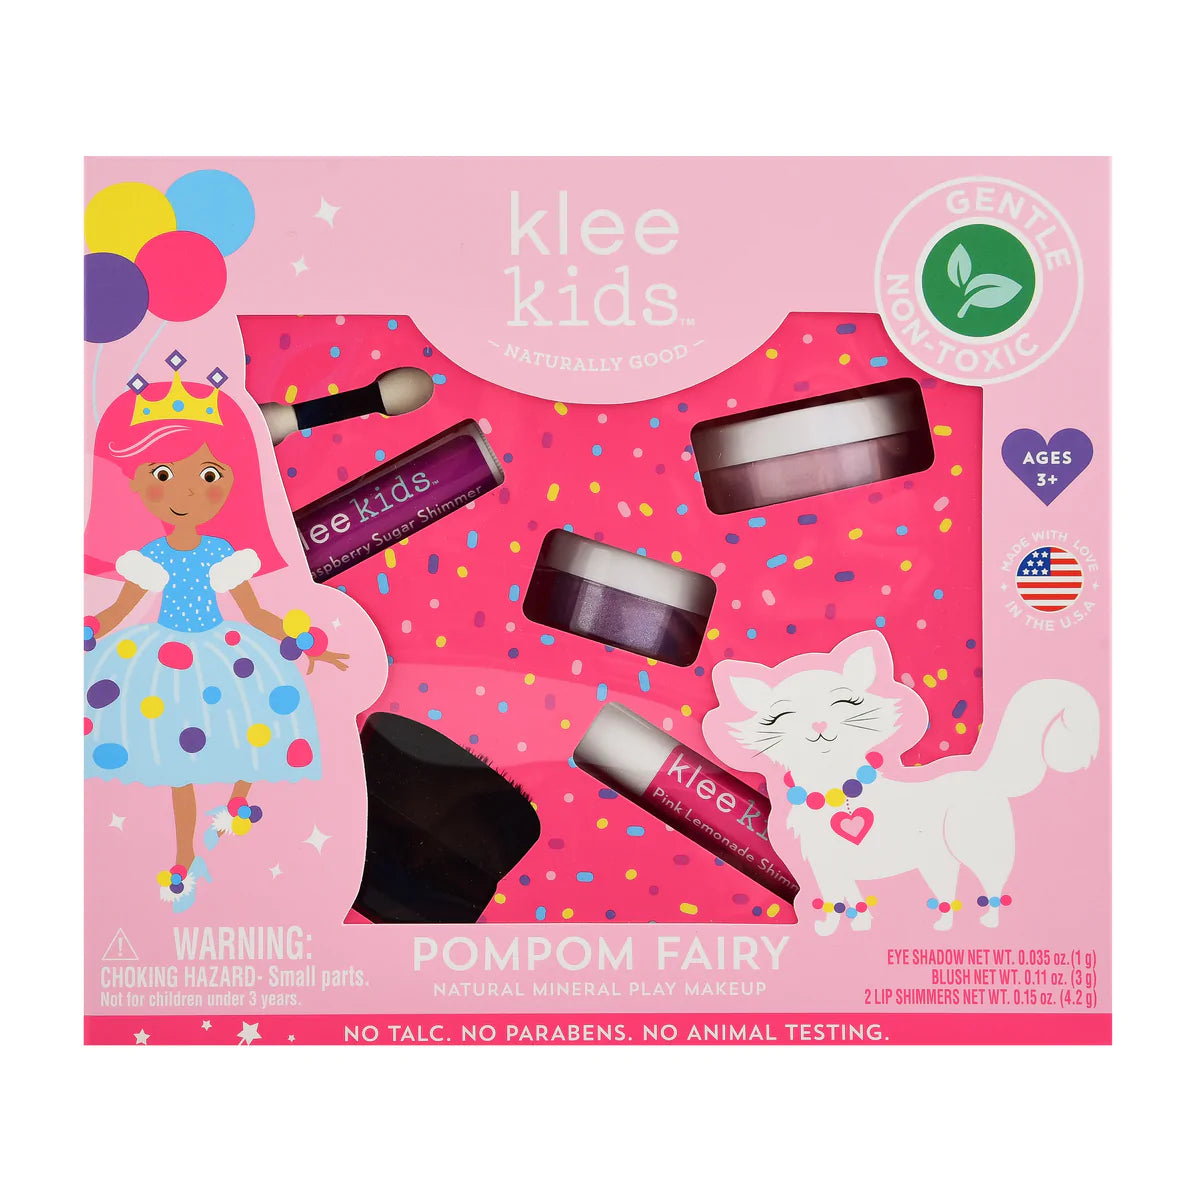 Klee Kids Natural Mineral Play Makeup Kit + More Colors